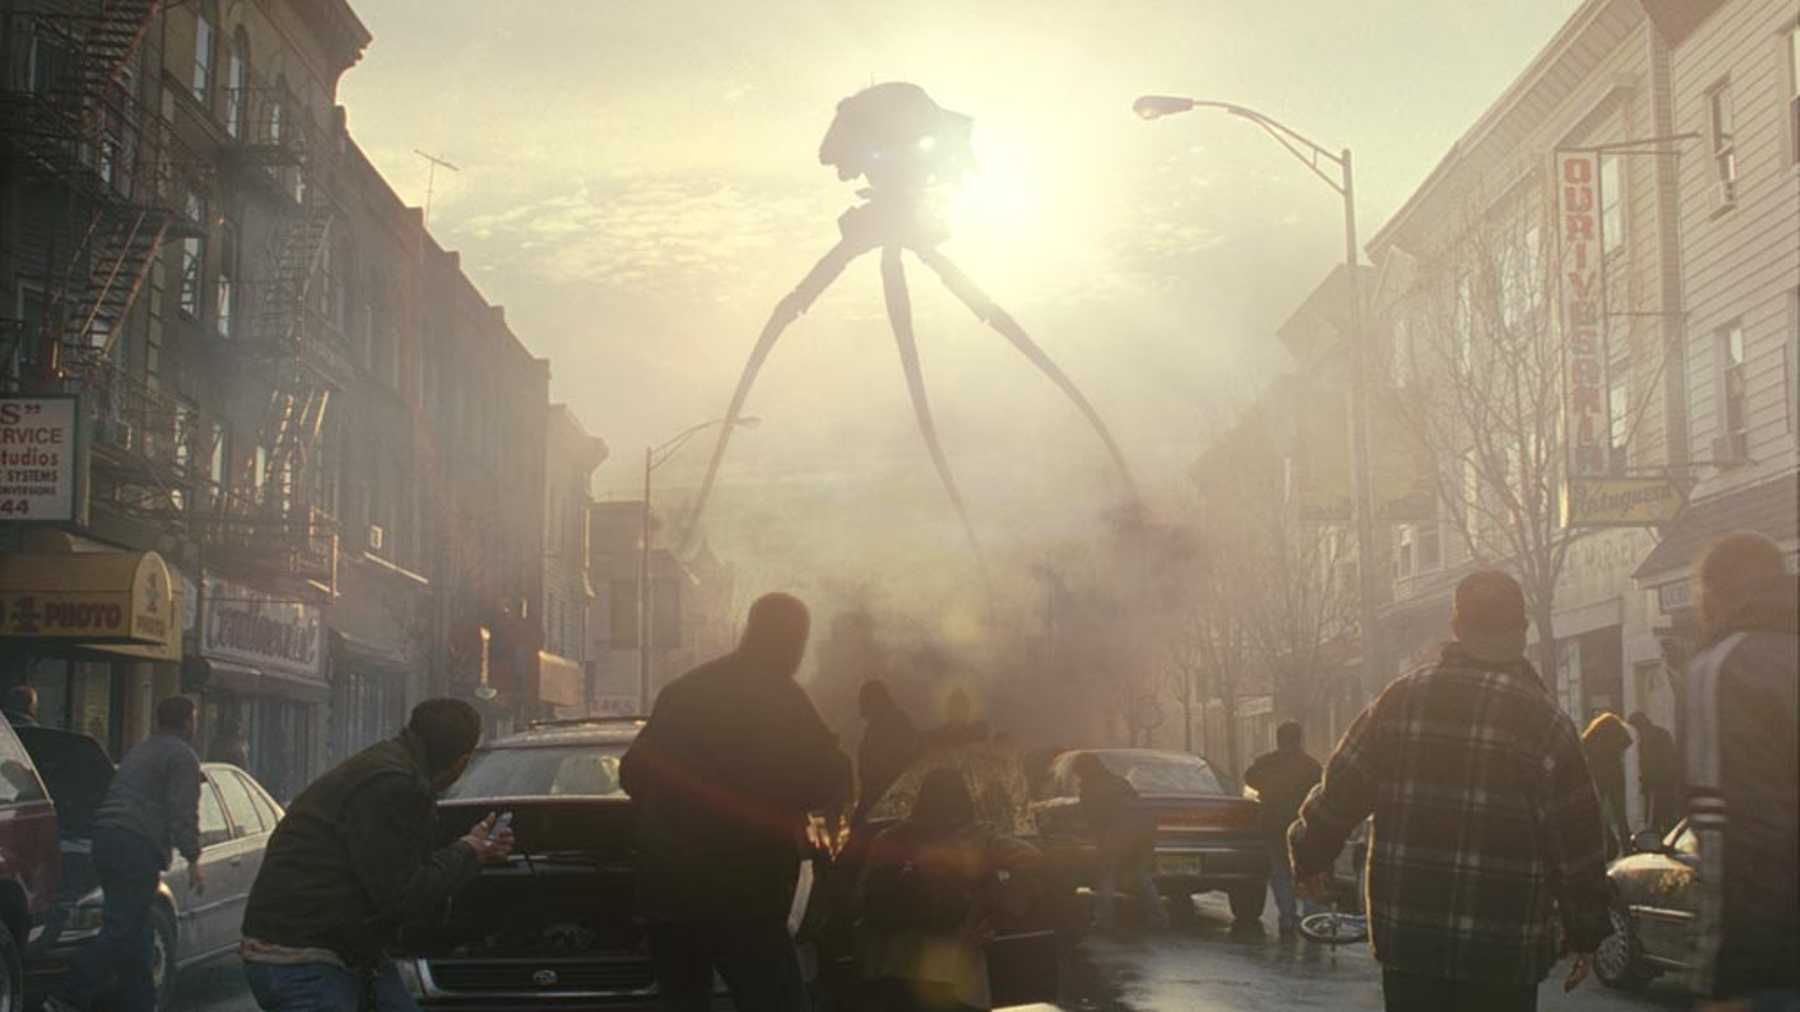 Spielberg, Steven, dir. War Of The Worlds. 2005. Paramount Pictures.